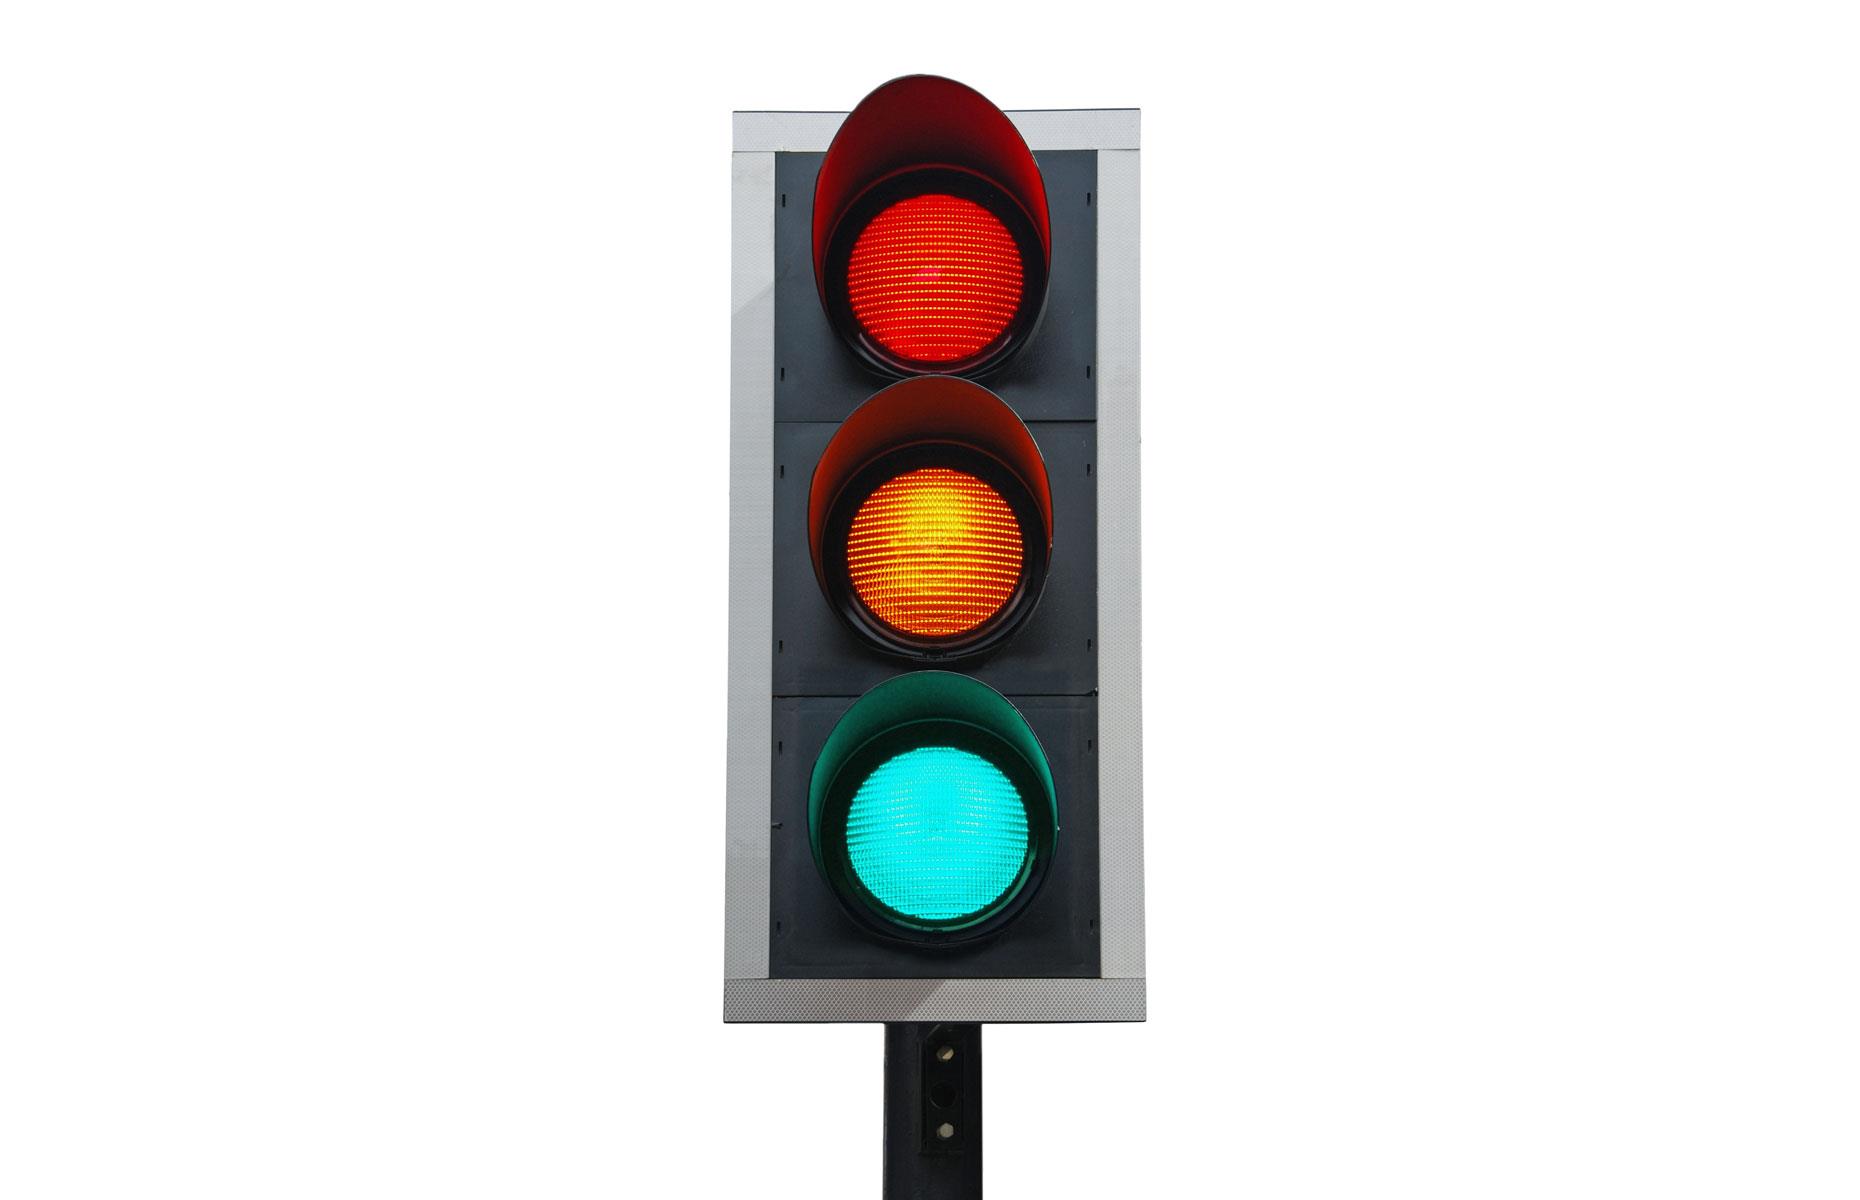 Siemens UK traffic lights